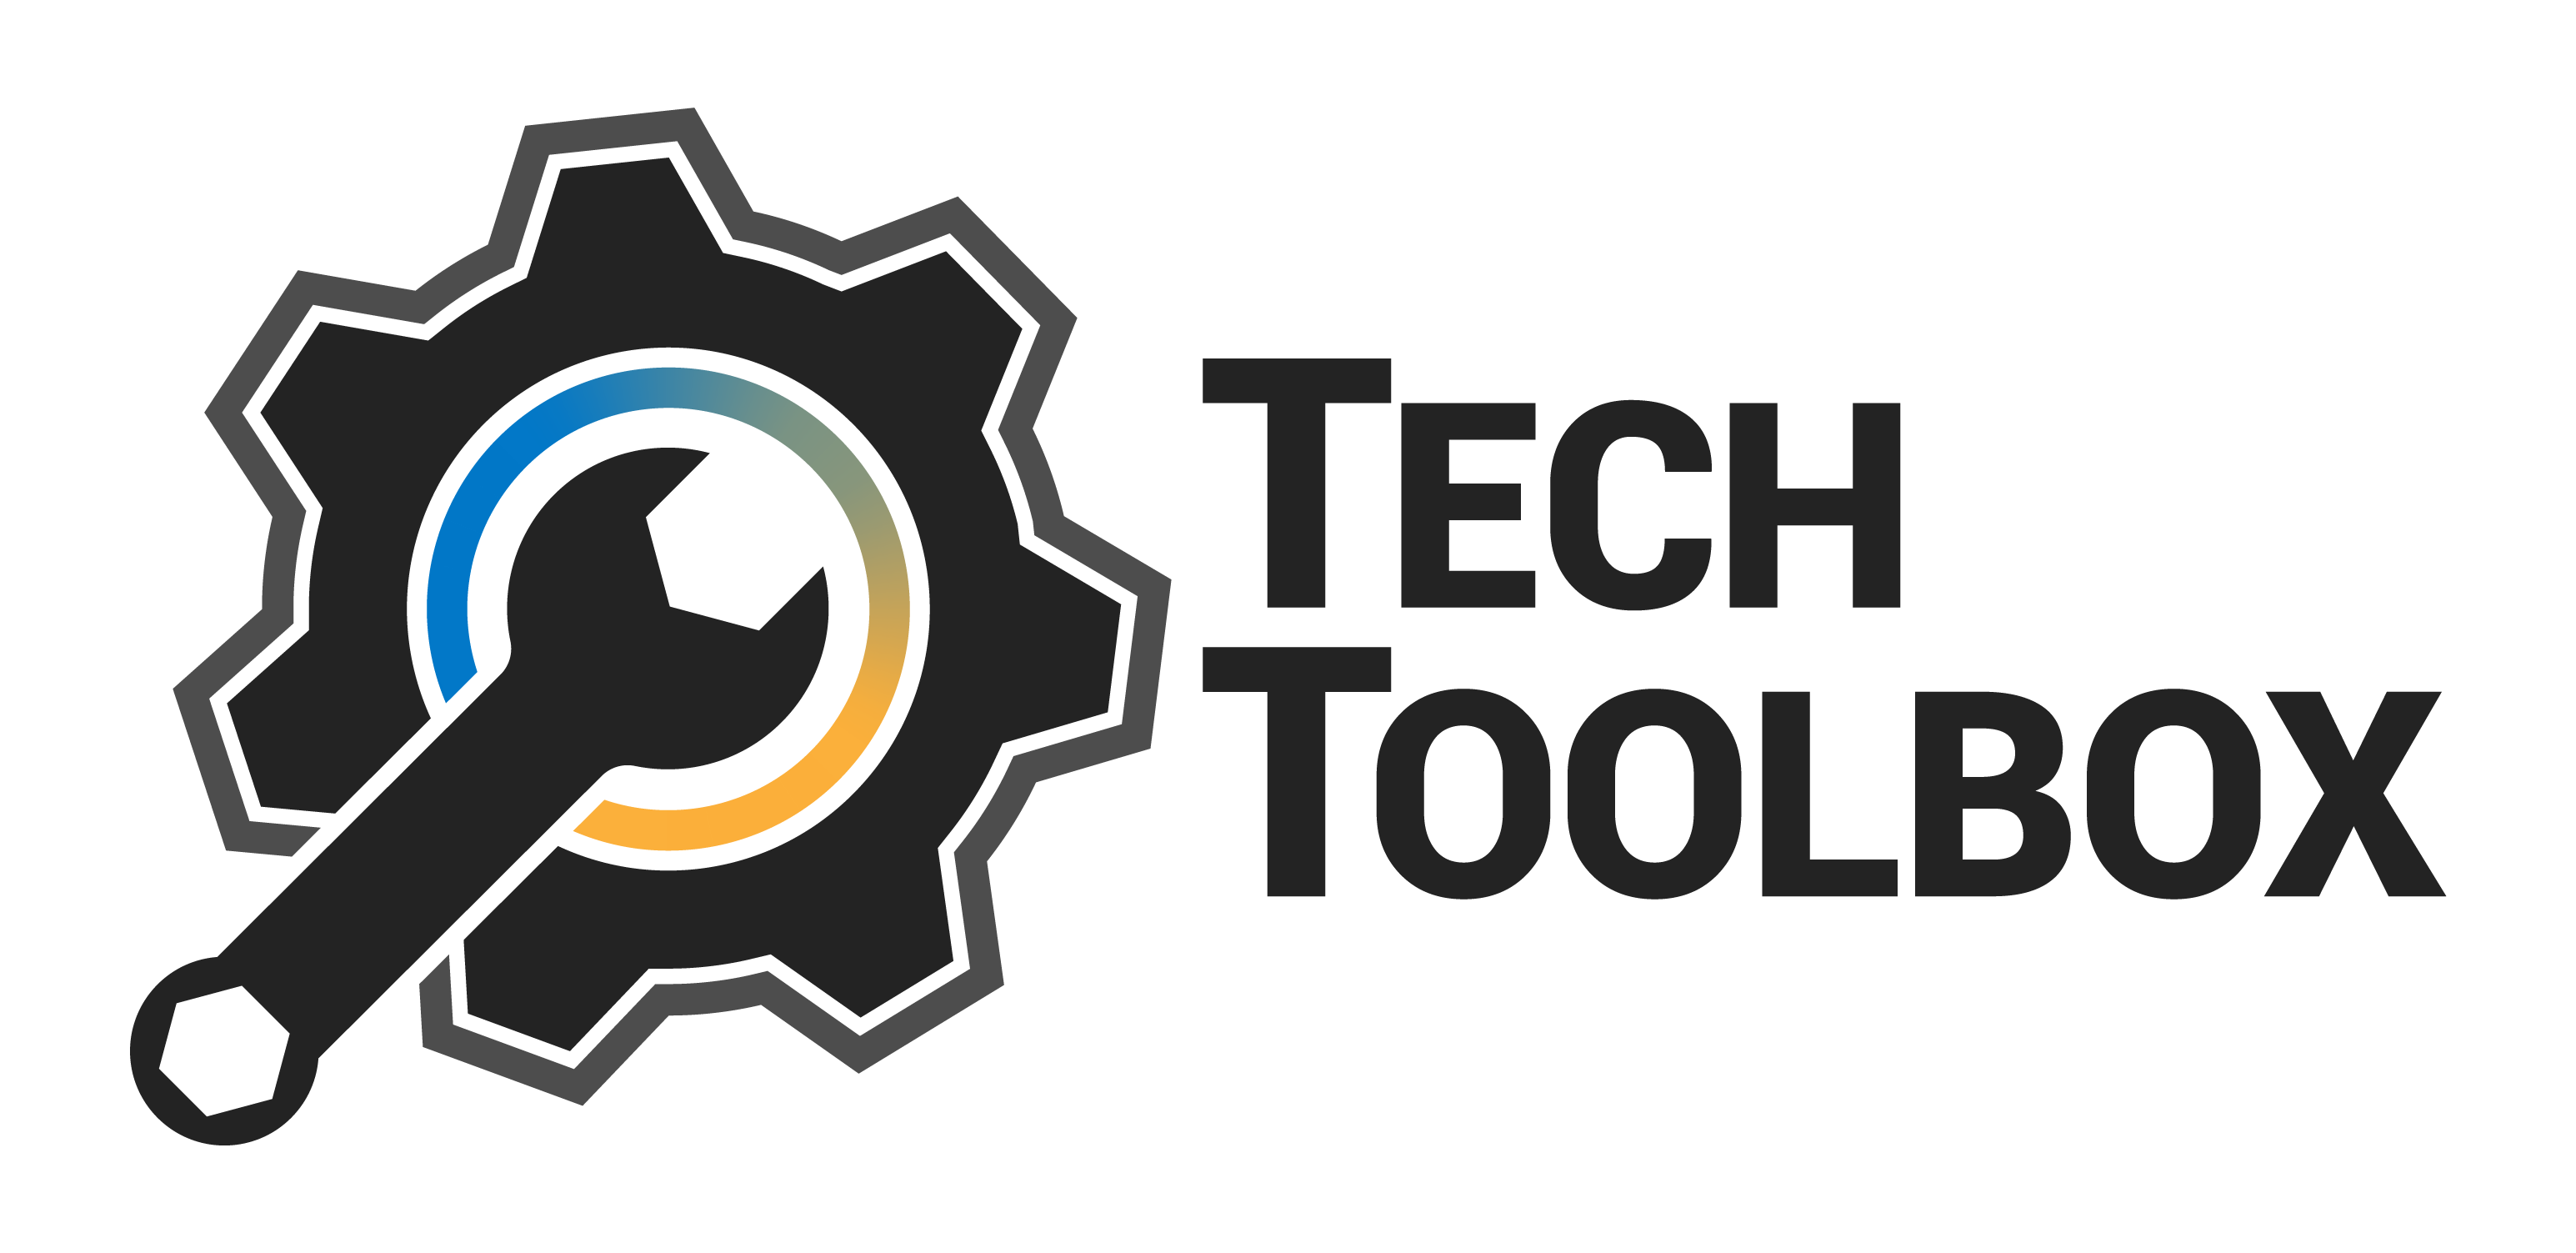 Tech Toolbox Logo Image